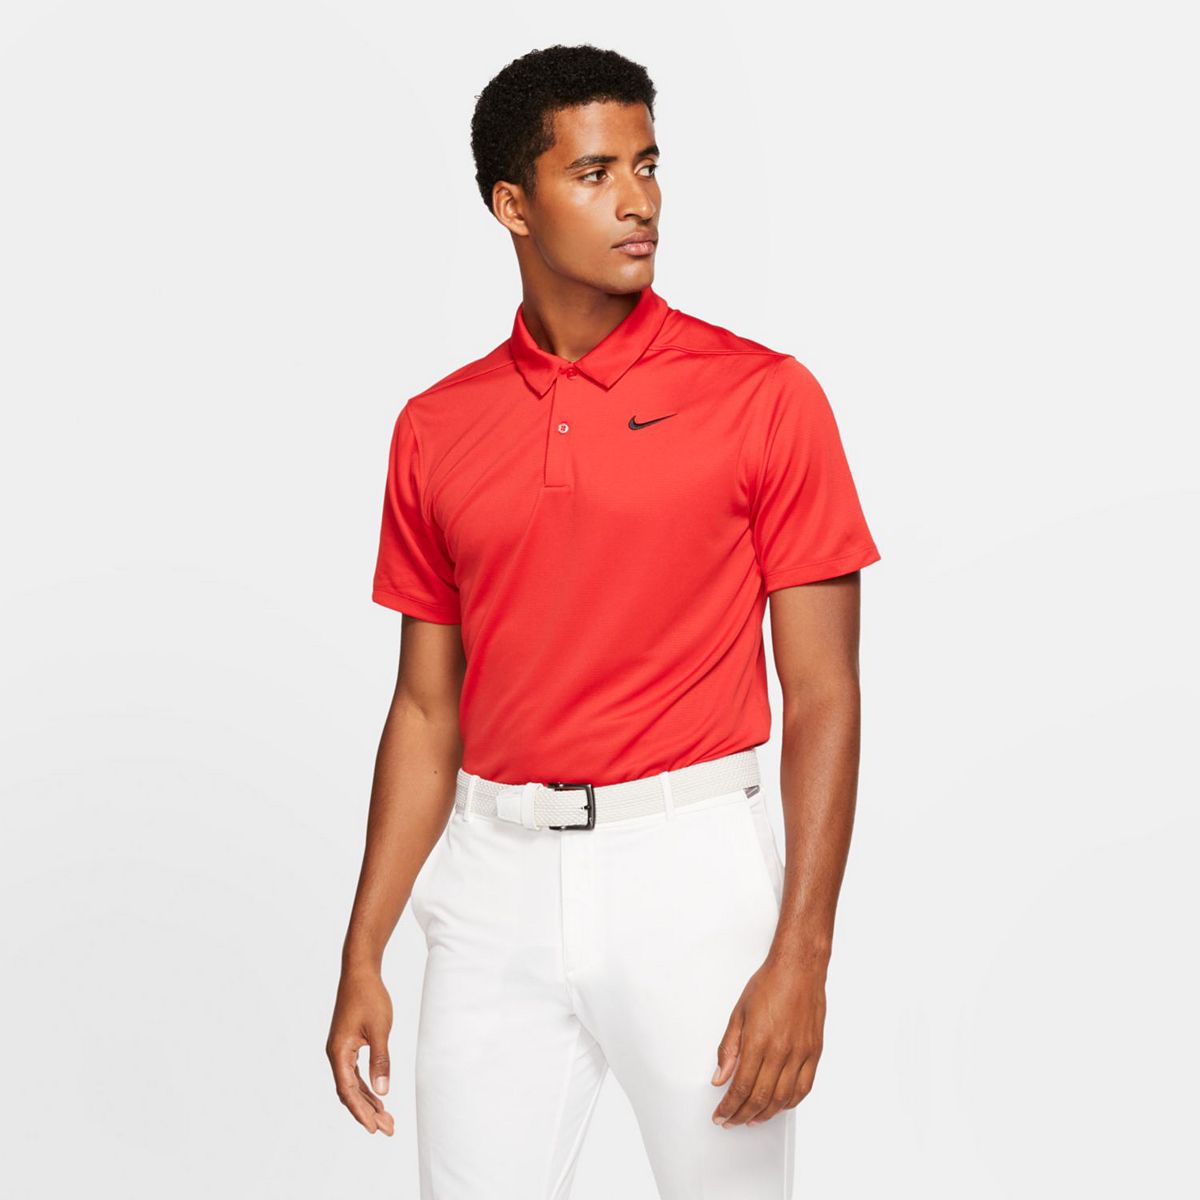 Escuela de posgrado revelación Transitorio Men's Nike Golf Shirts: Tee Off in Style in Men's Nike Golf Tops | Kohl's